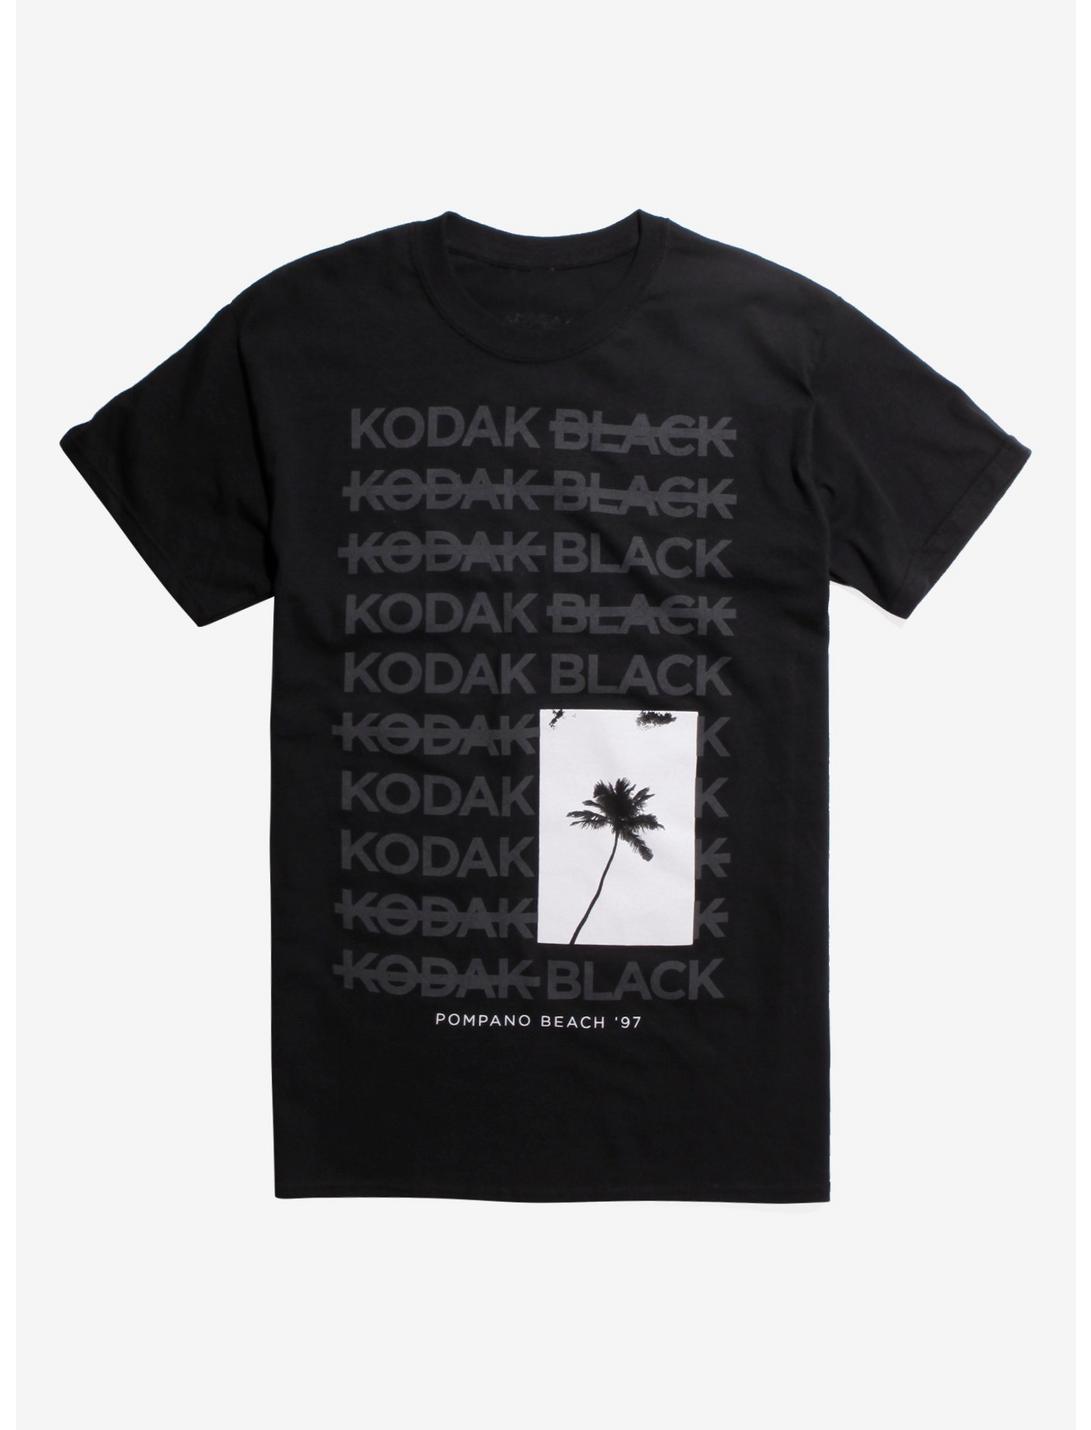 Kodak Black Project Baby Tour T-Shirt, BLACK, hi-res